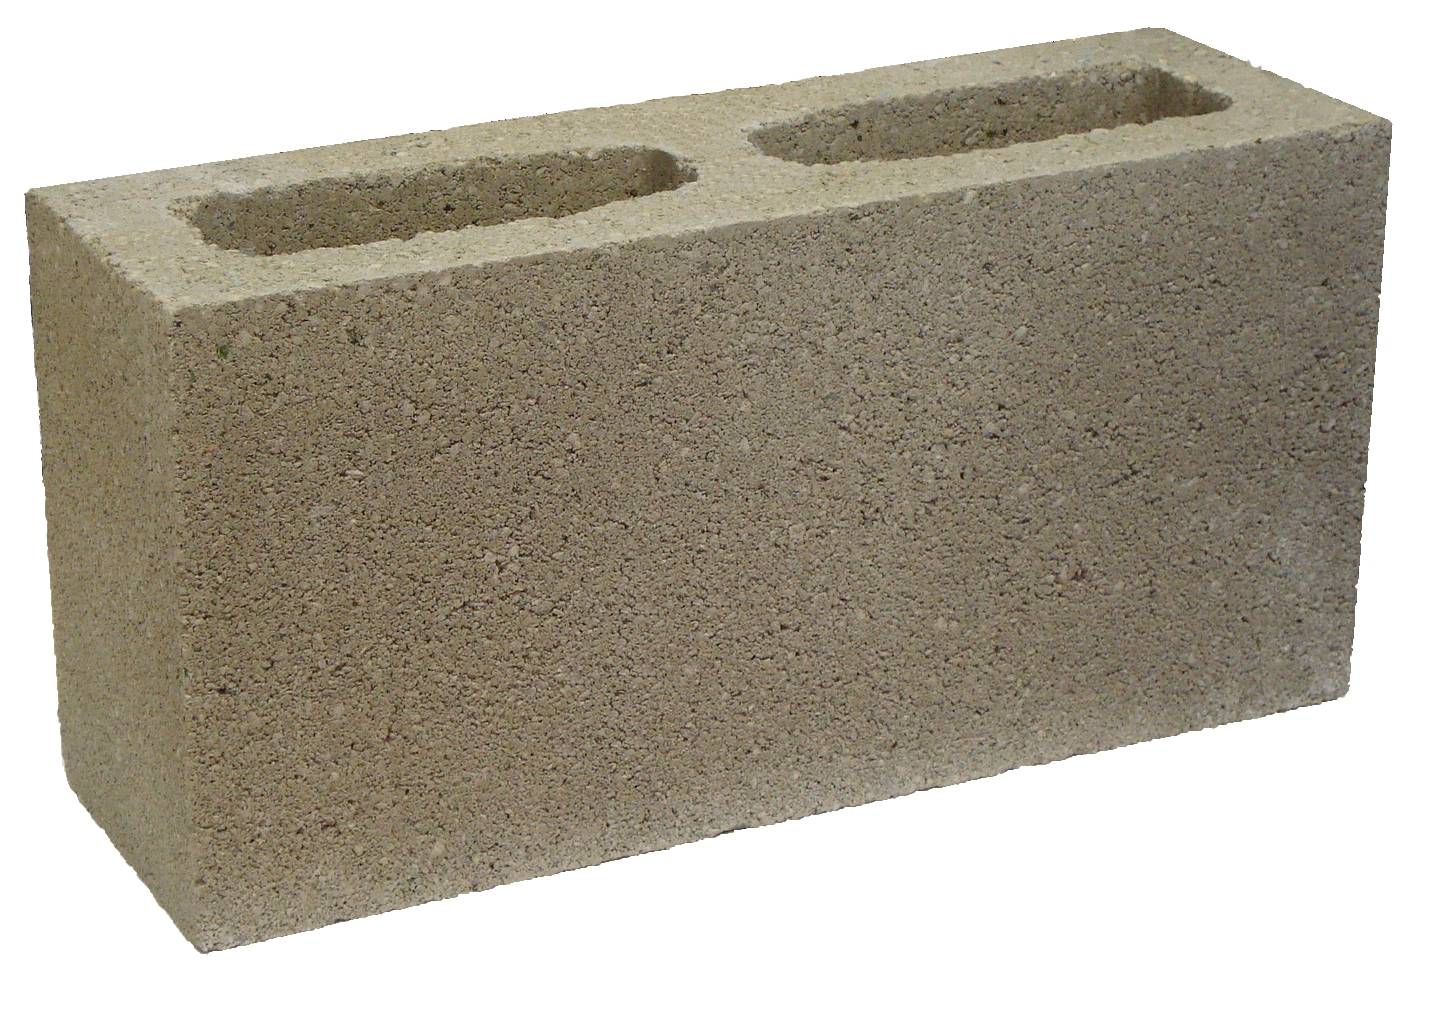 Cellular Dense Concrete Block 